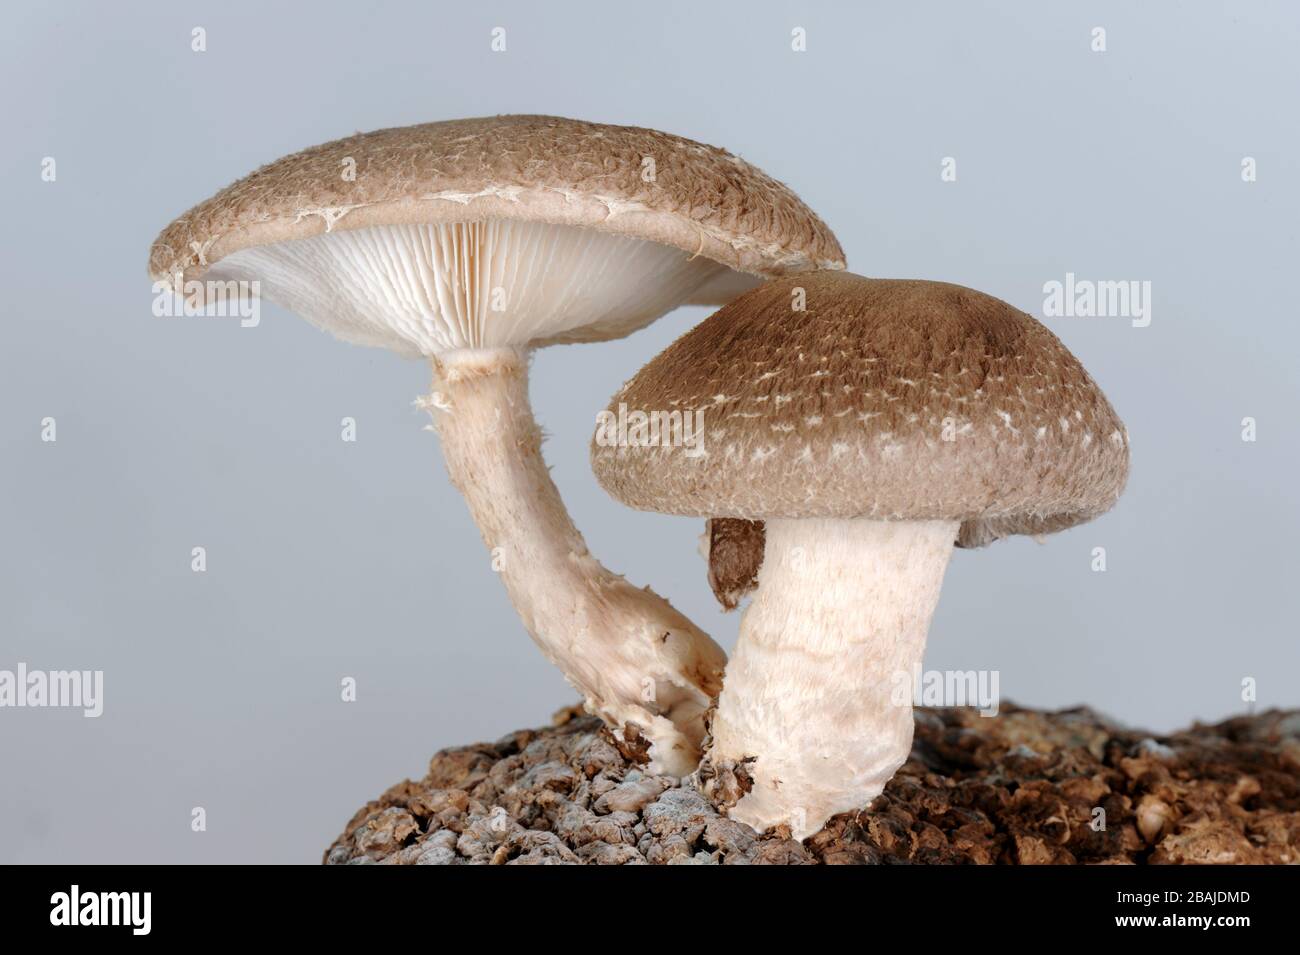 Shiitake mushrooms (Lentinus edodes) edible fungi growing on a compost block Stock Photo